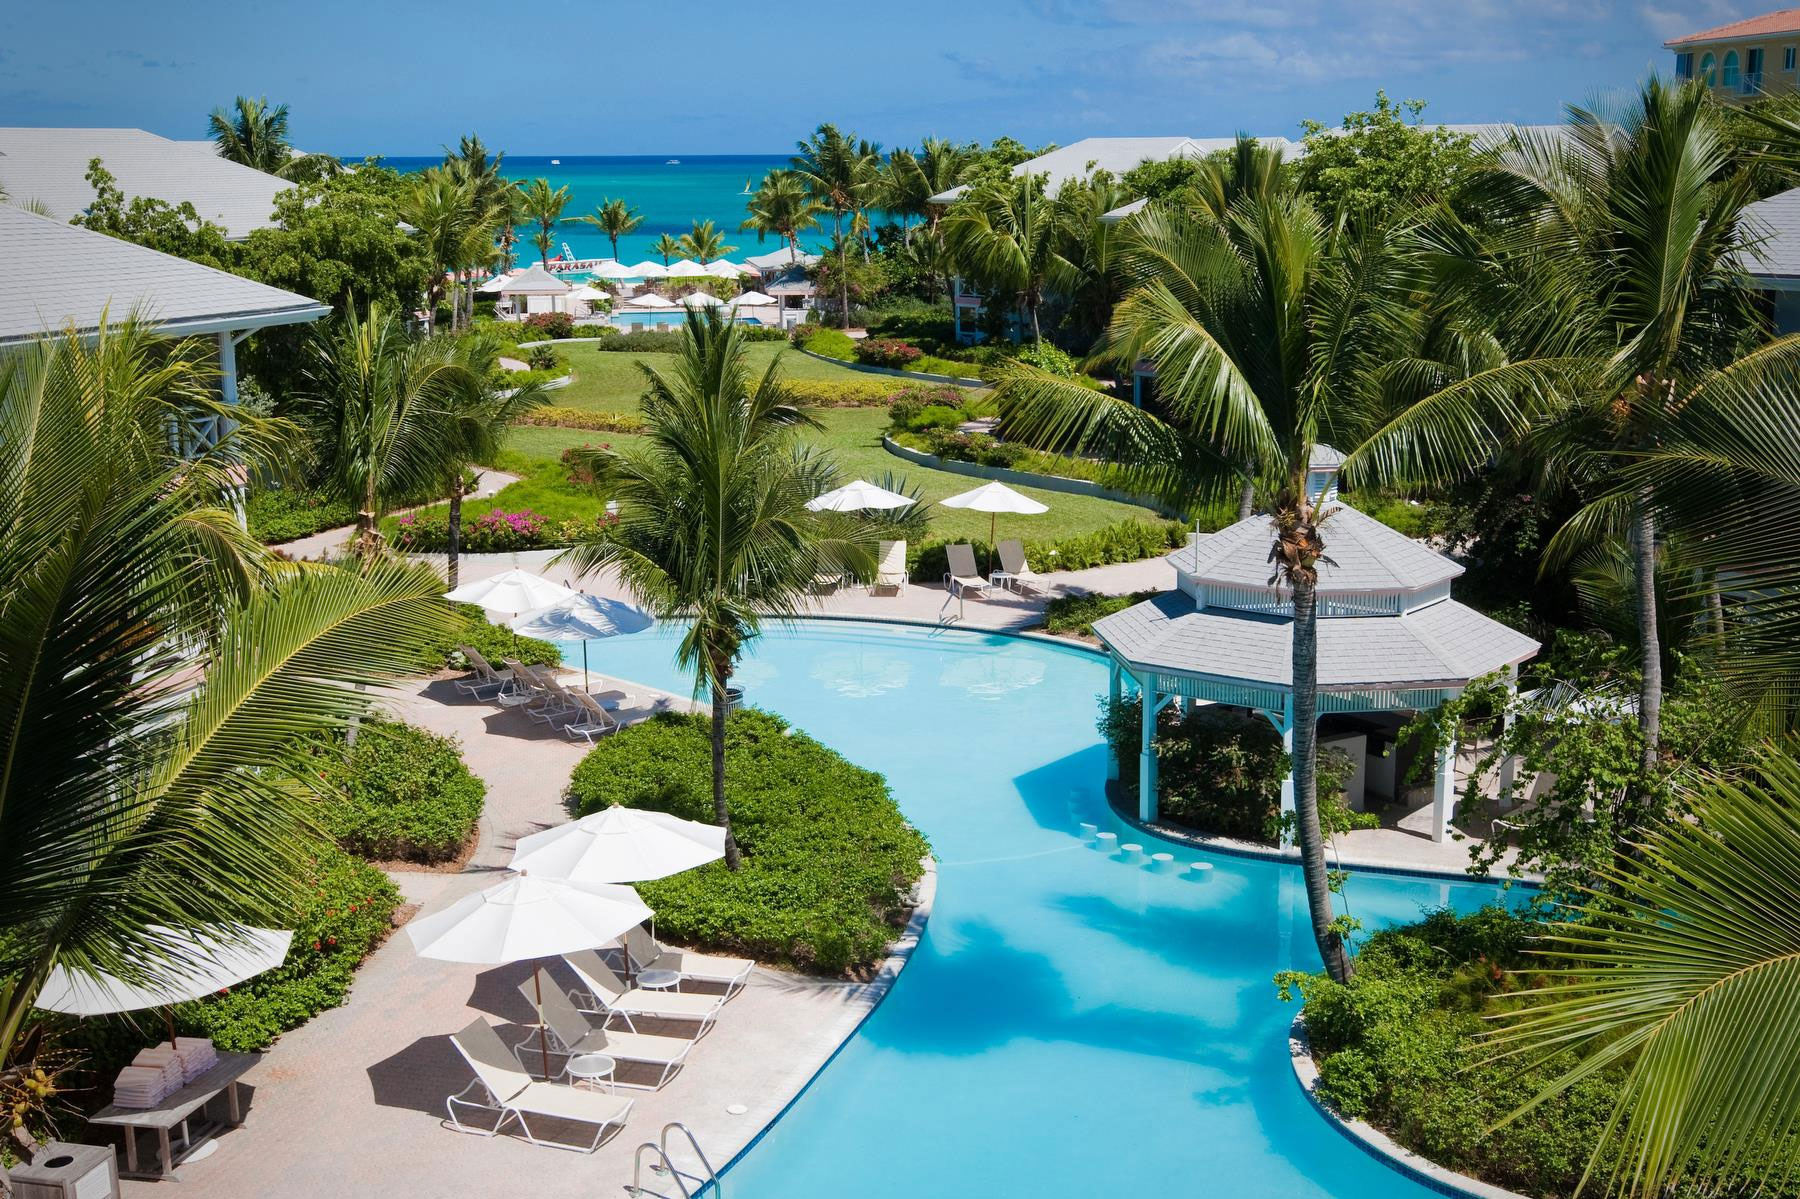 Ocean Club resort pool